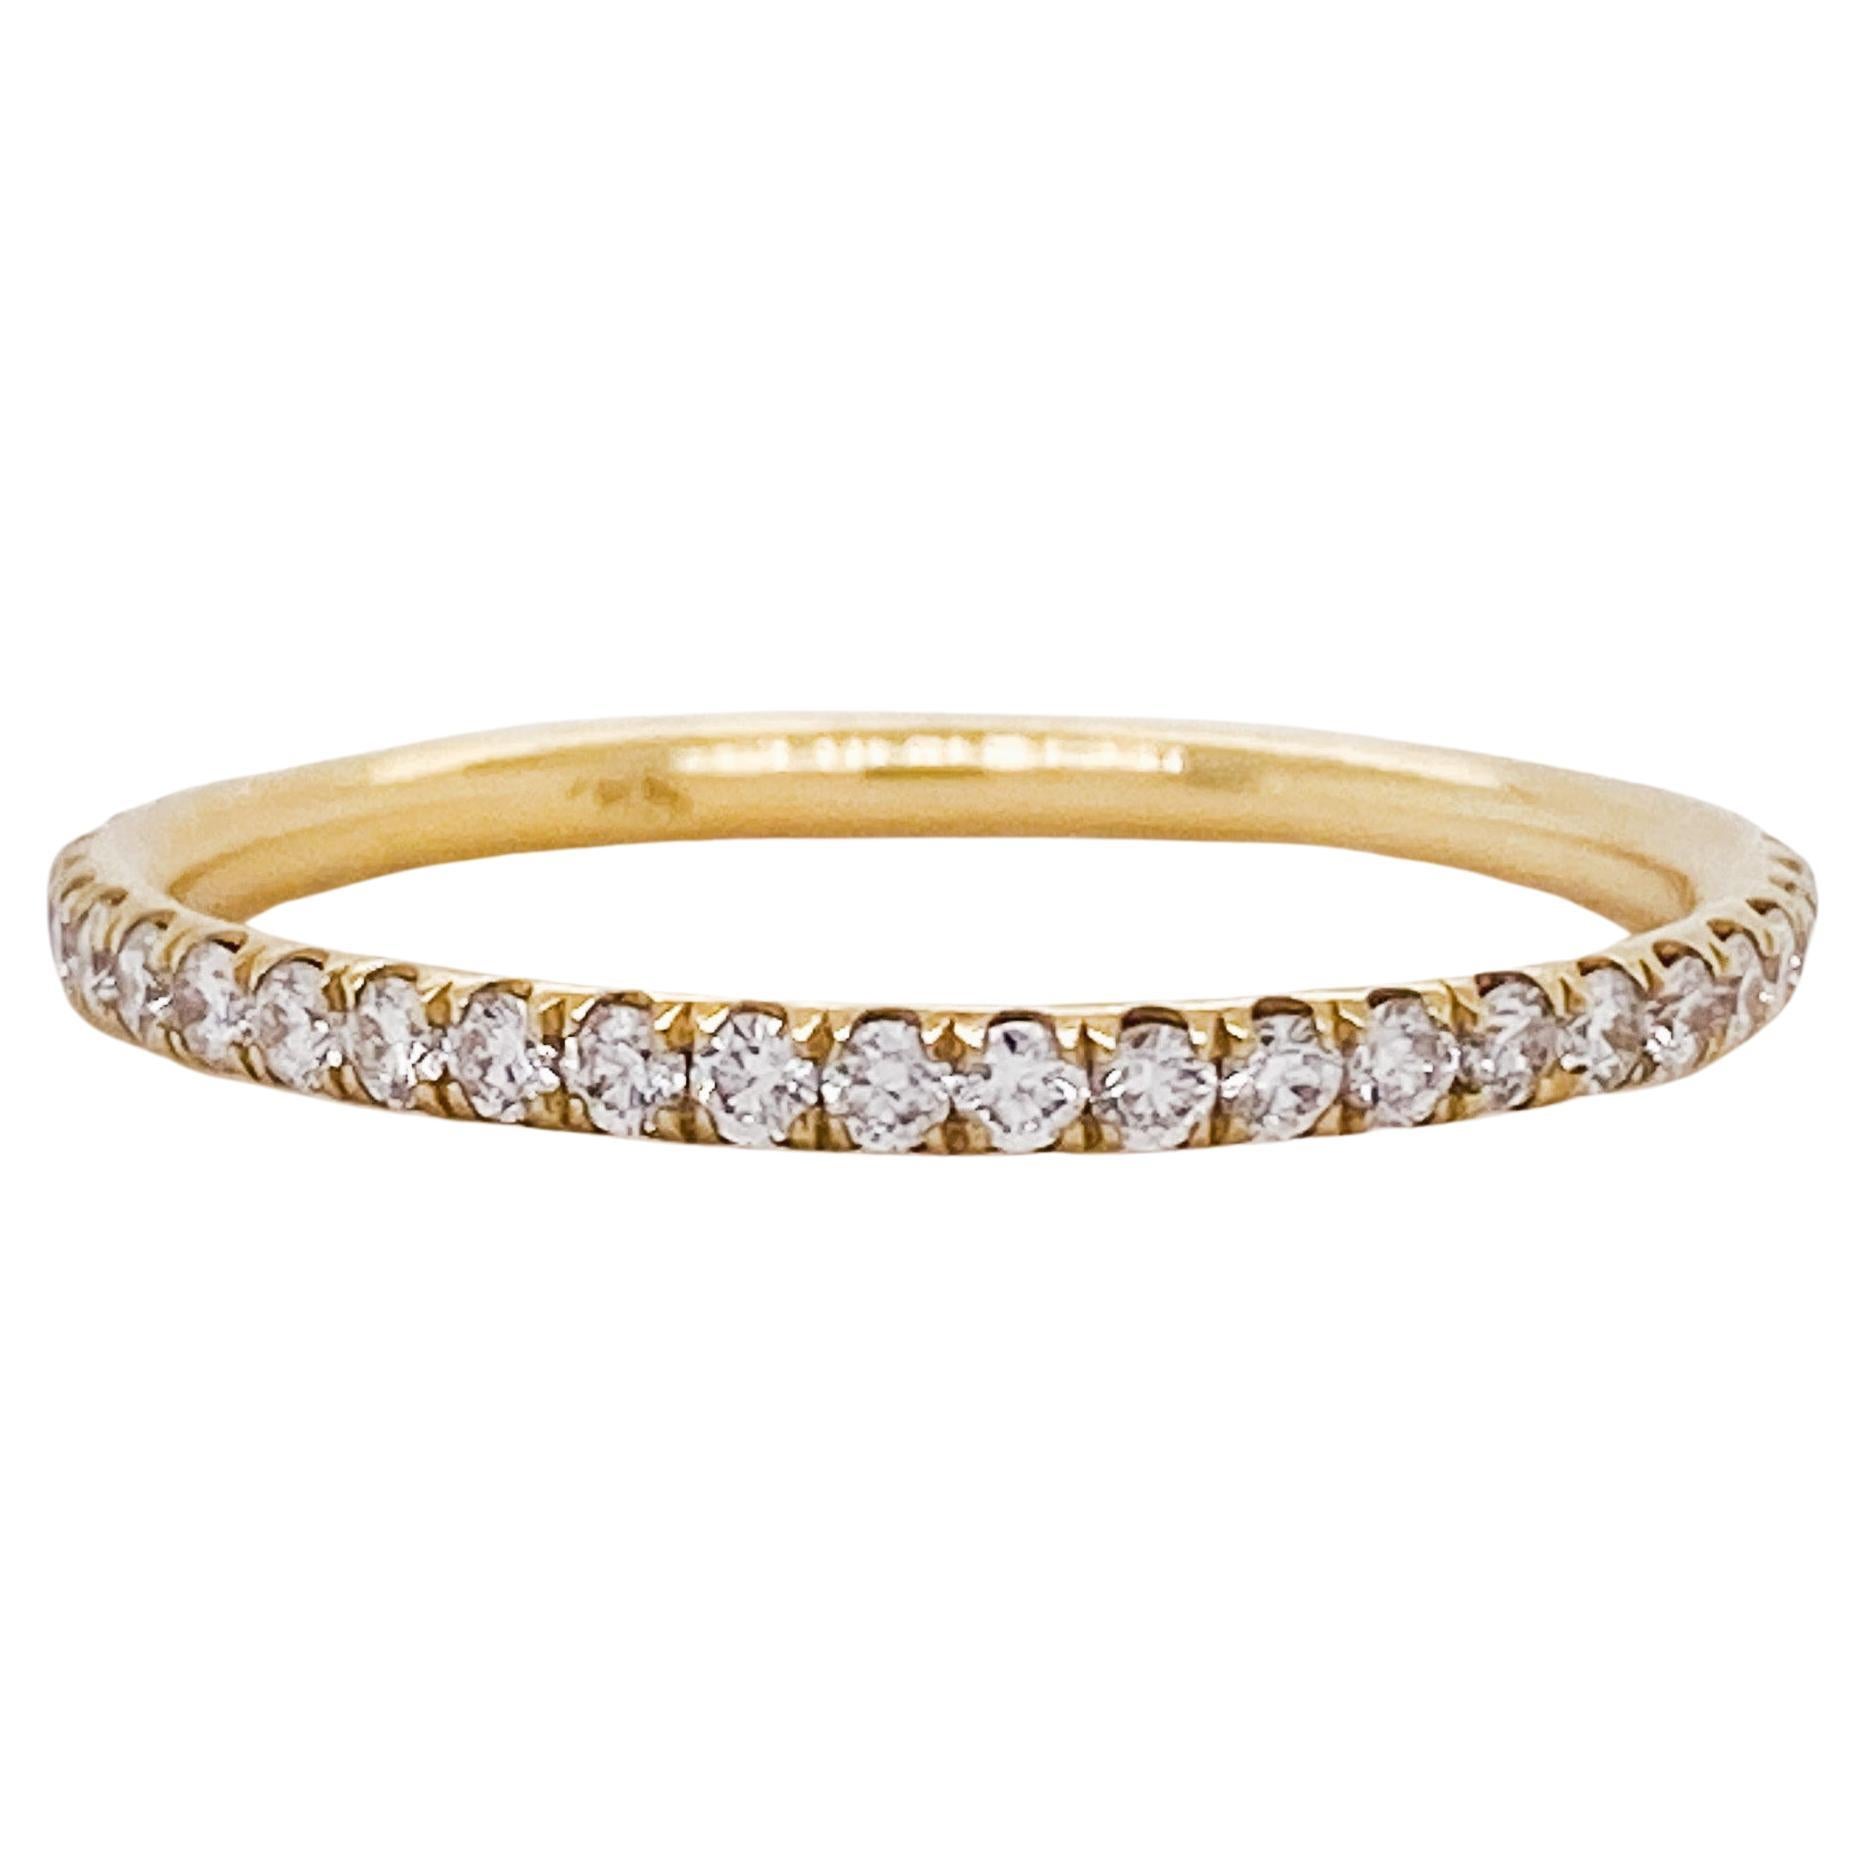 Eternity Diamond Ring Slender 18K Yellow Gold, 1/2 Carat Diamonds, 0.52 Carats